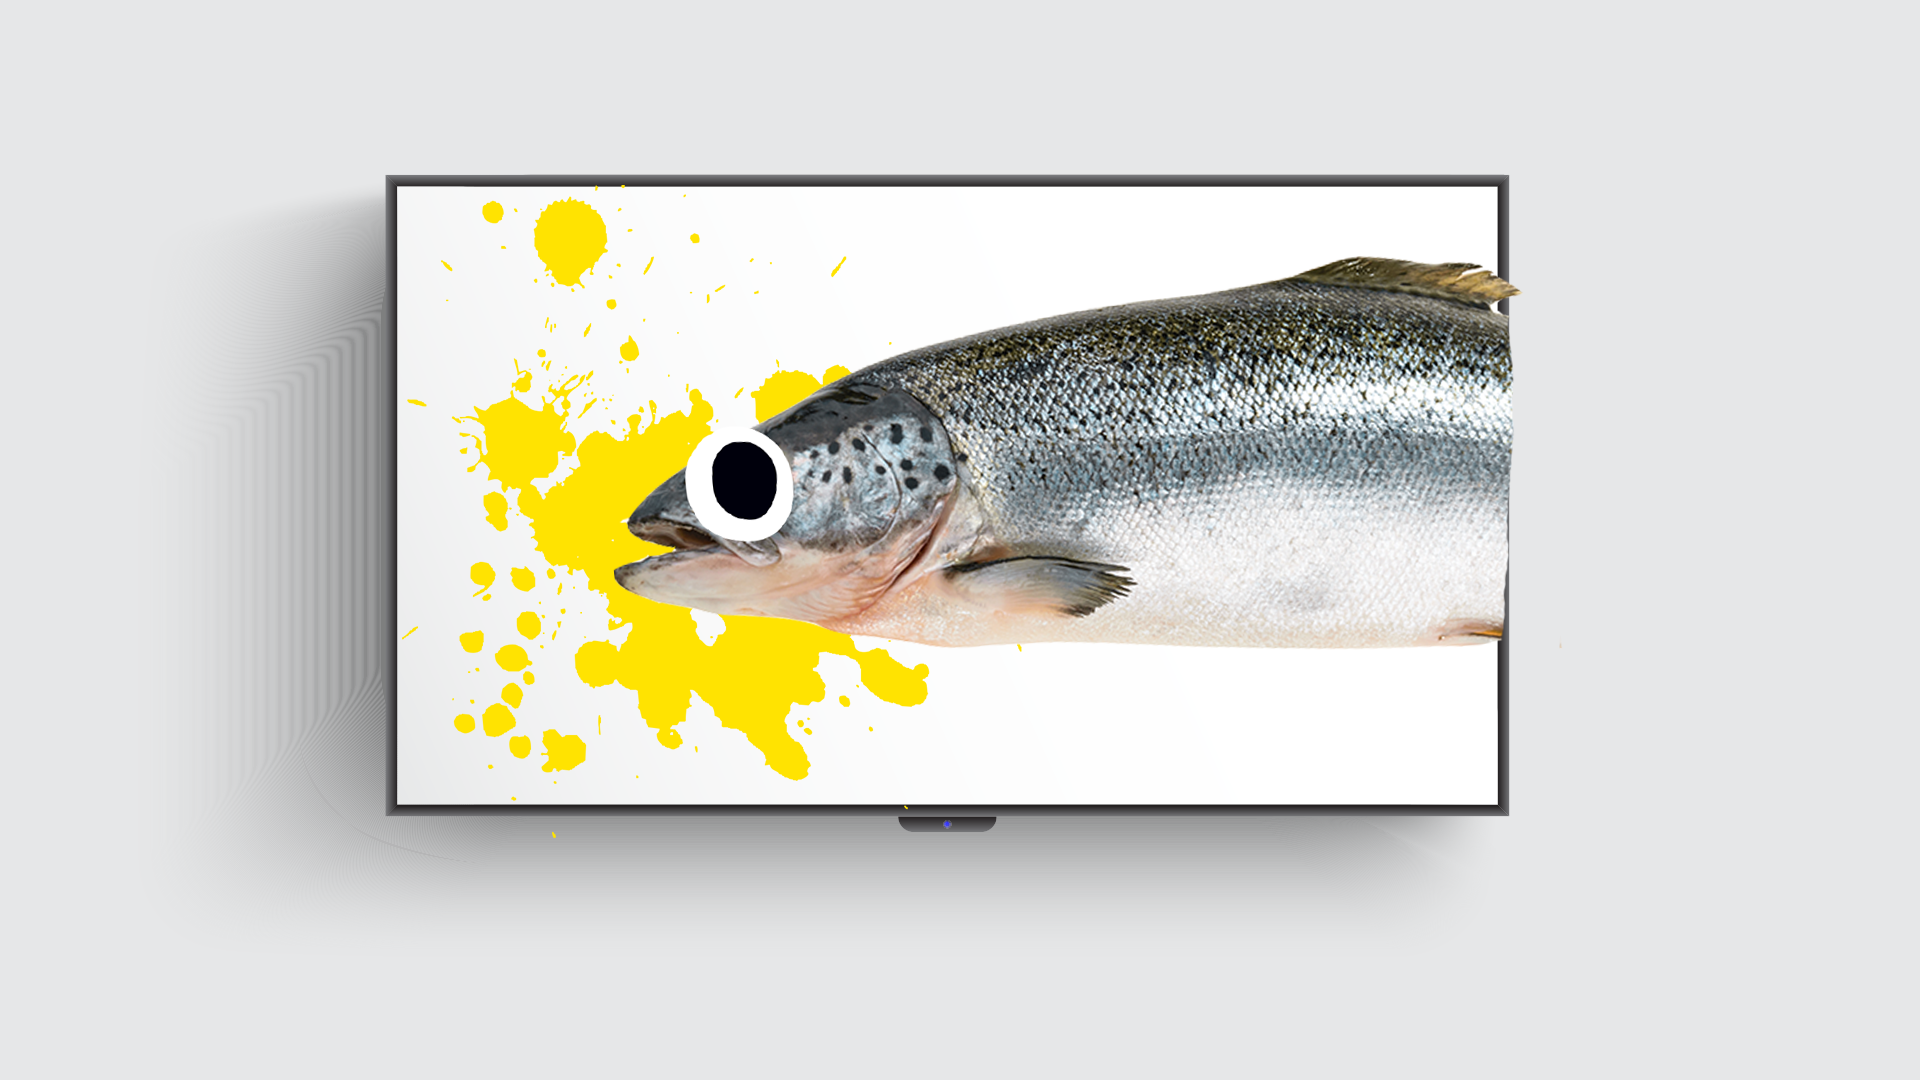 A salmon tv show